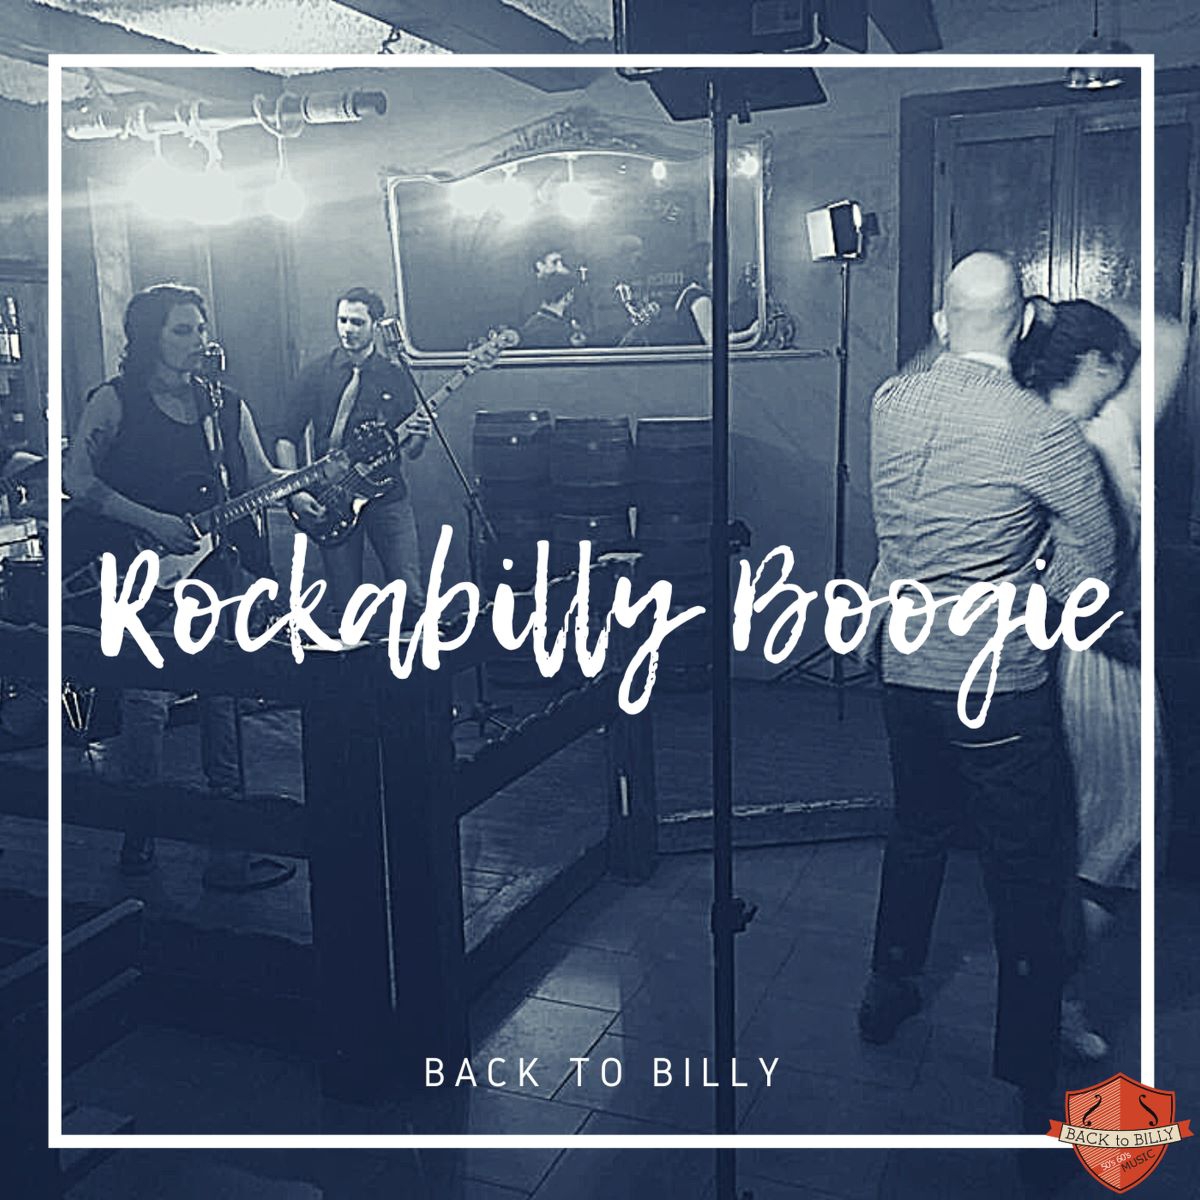 Back to Billy - “Rockabilly Boogie”